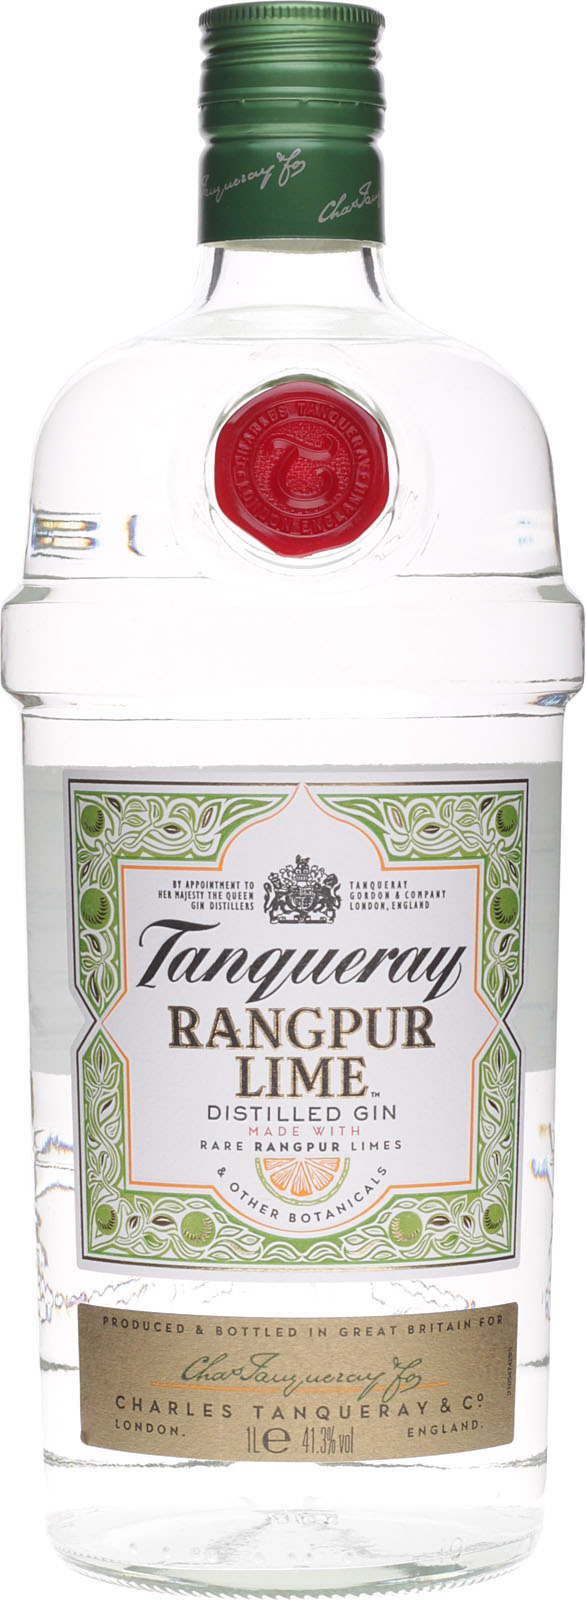 uns hier im Onlineshop Gin Rangpur bei Tanqueray